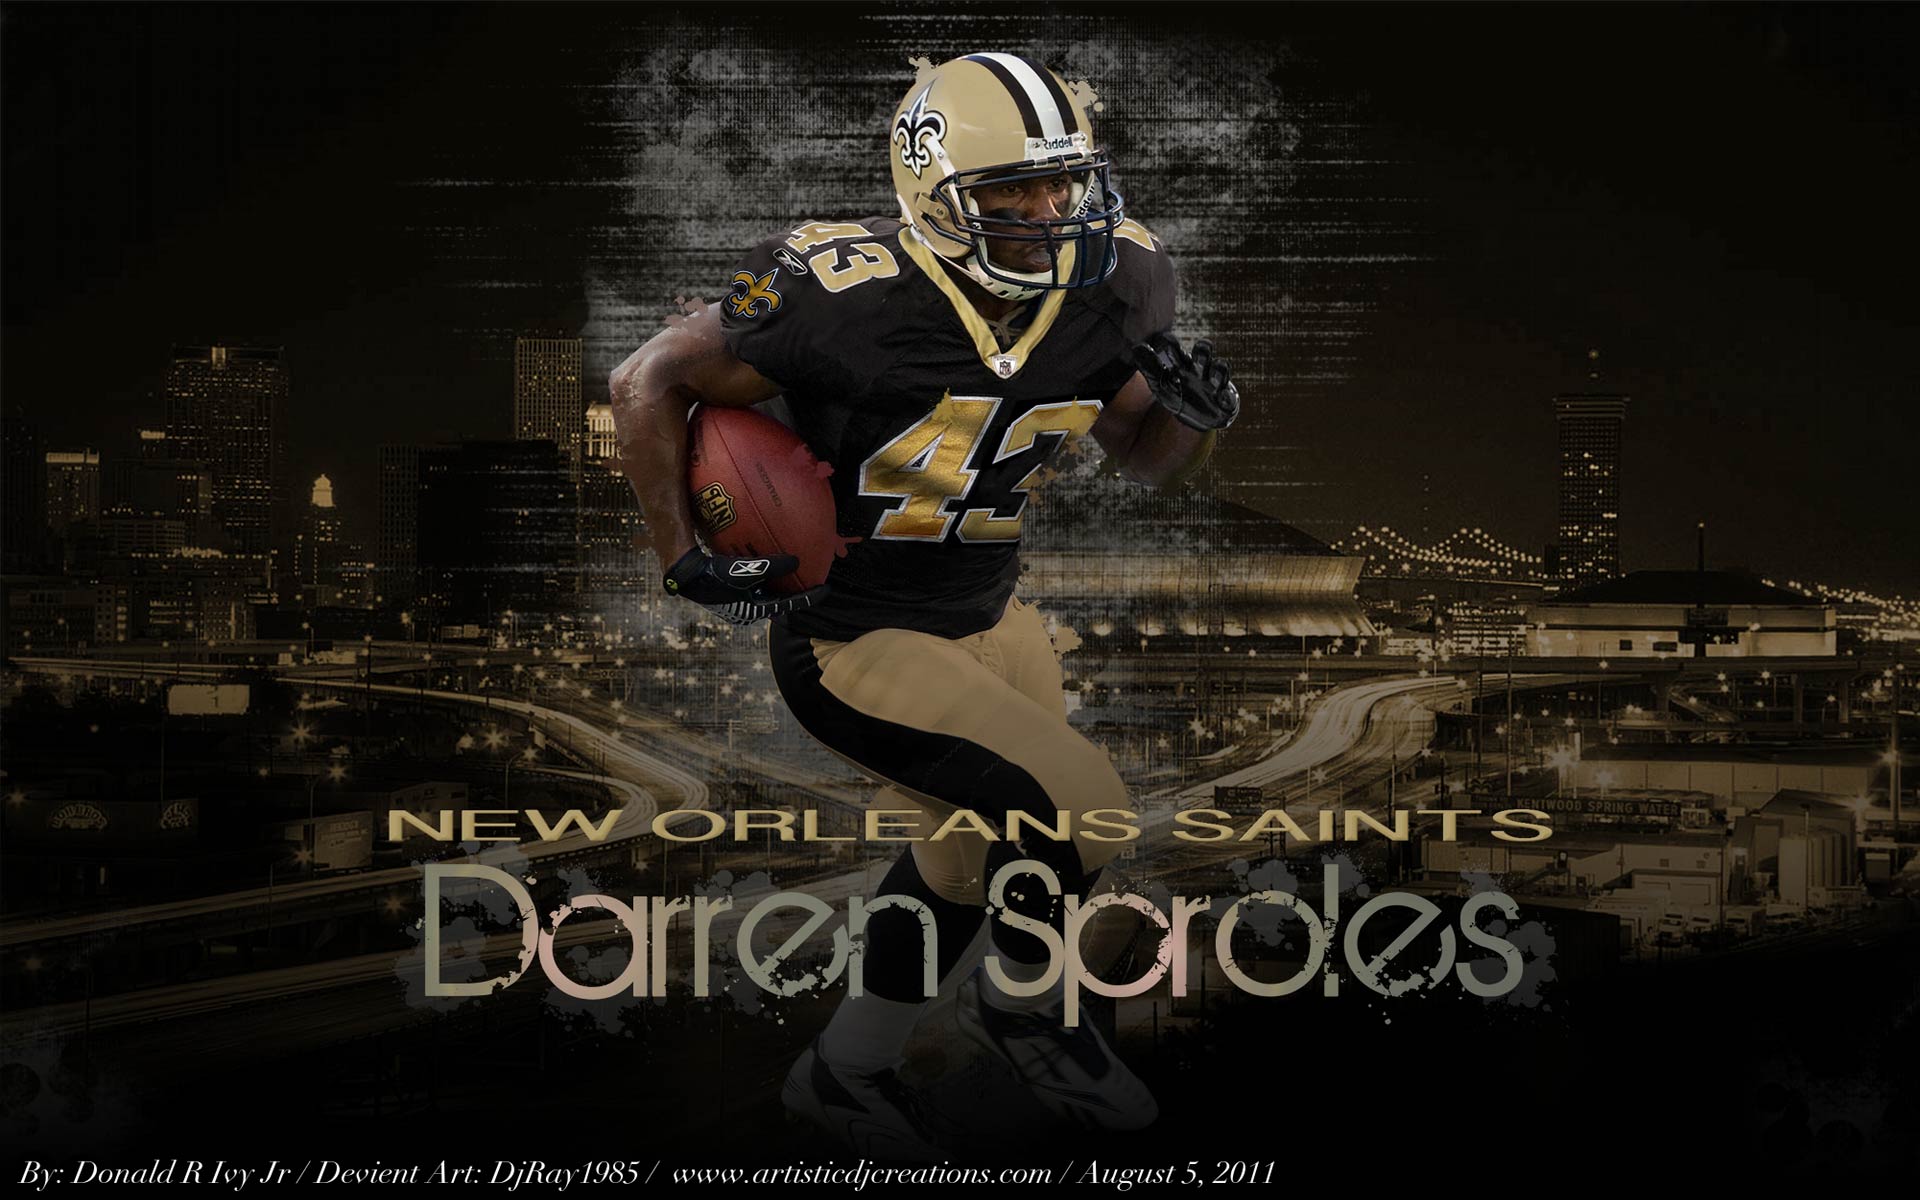 Enjoy this new New Orleans Saints desktop background